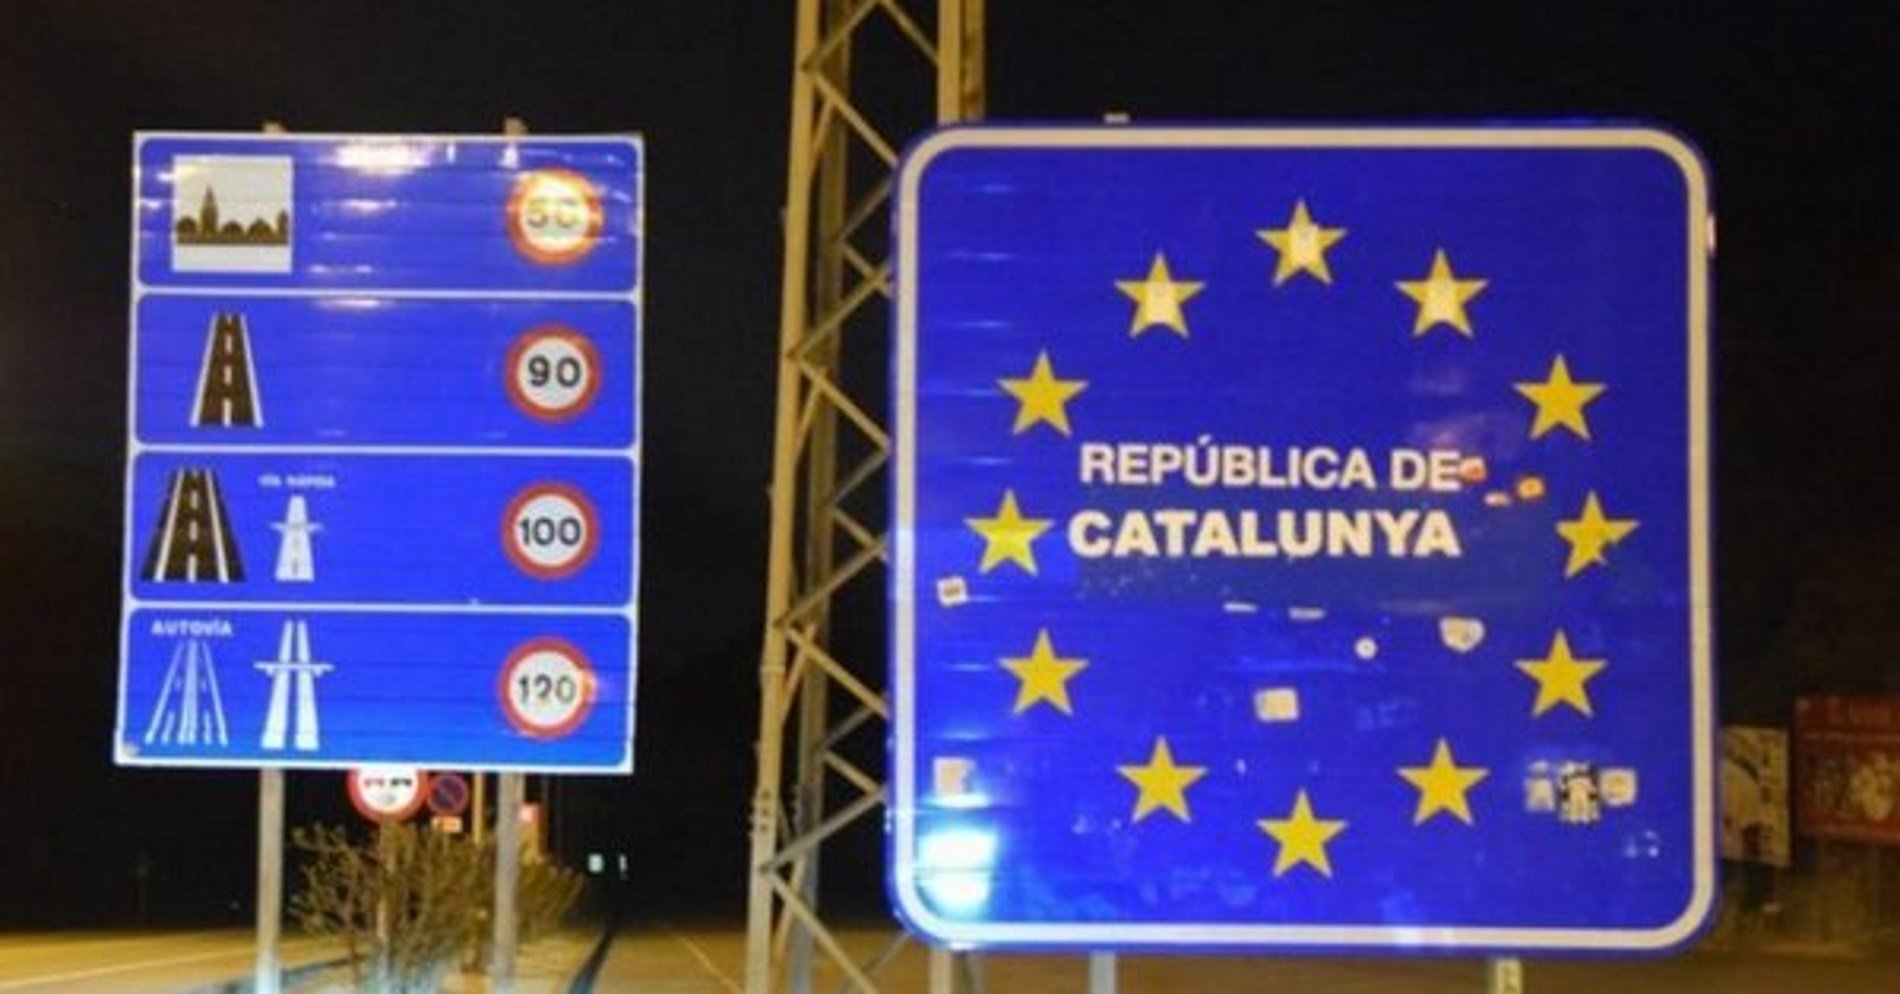 El cartel de la frontera de El Pertús anuncia la "República de Catalunya"